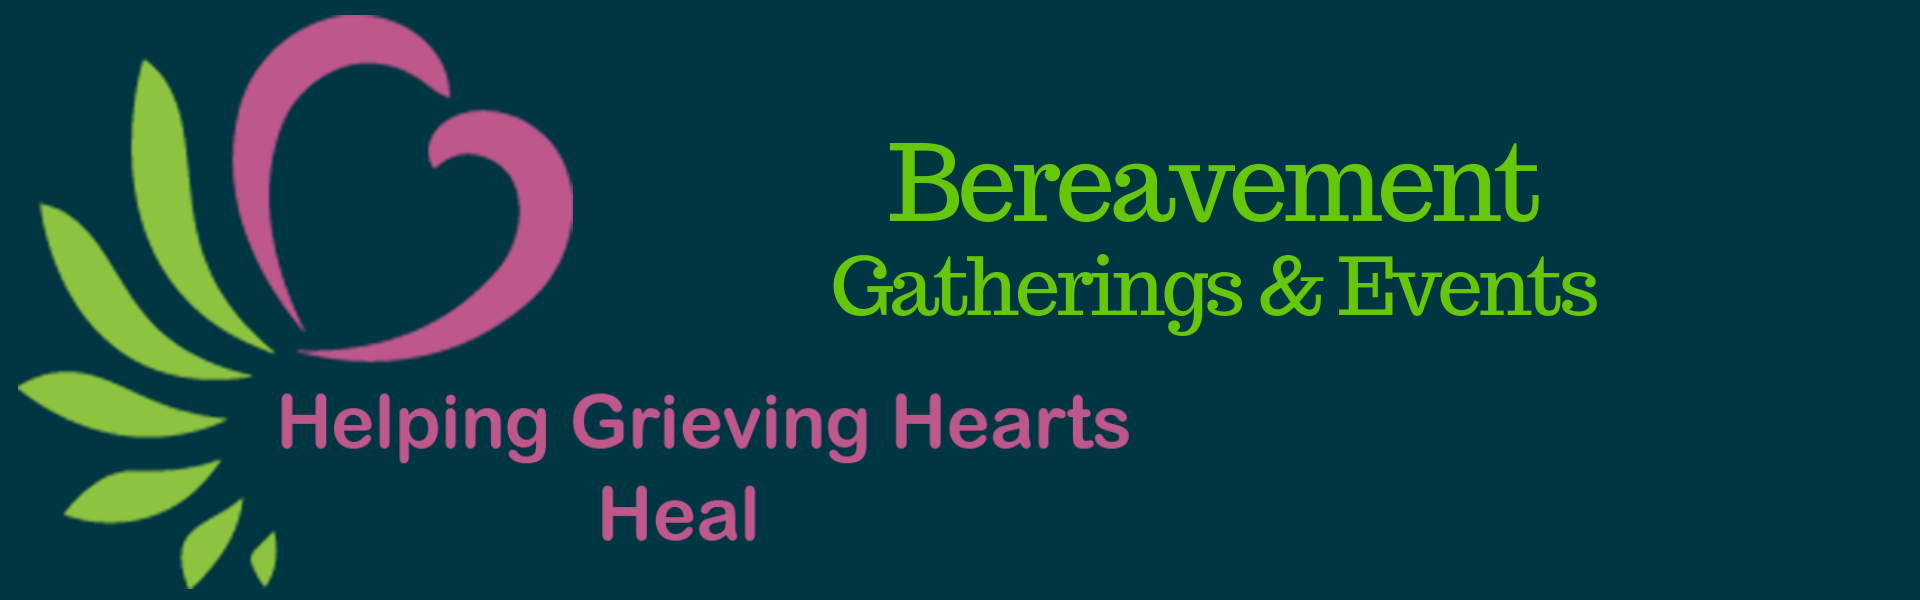 2019 - Website - Bereavement Gatherings & Events